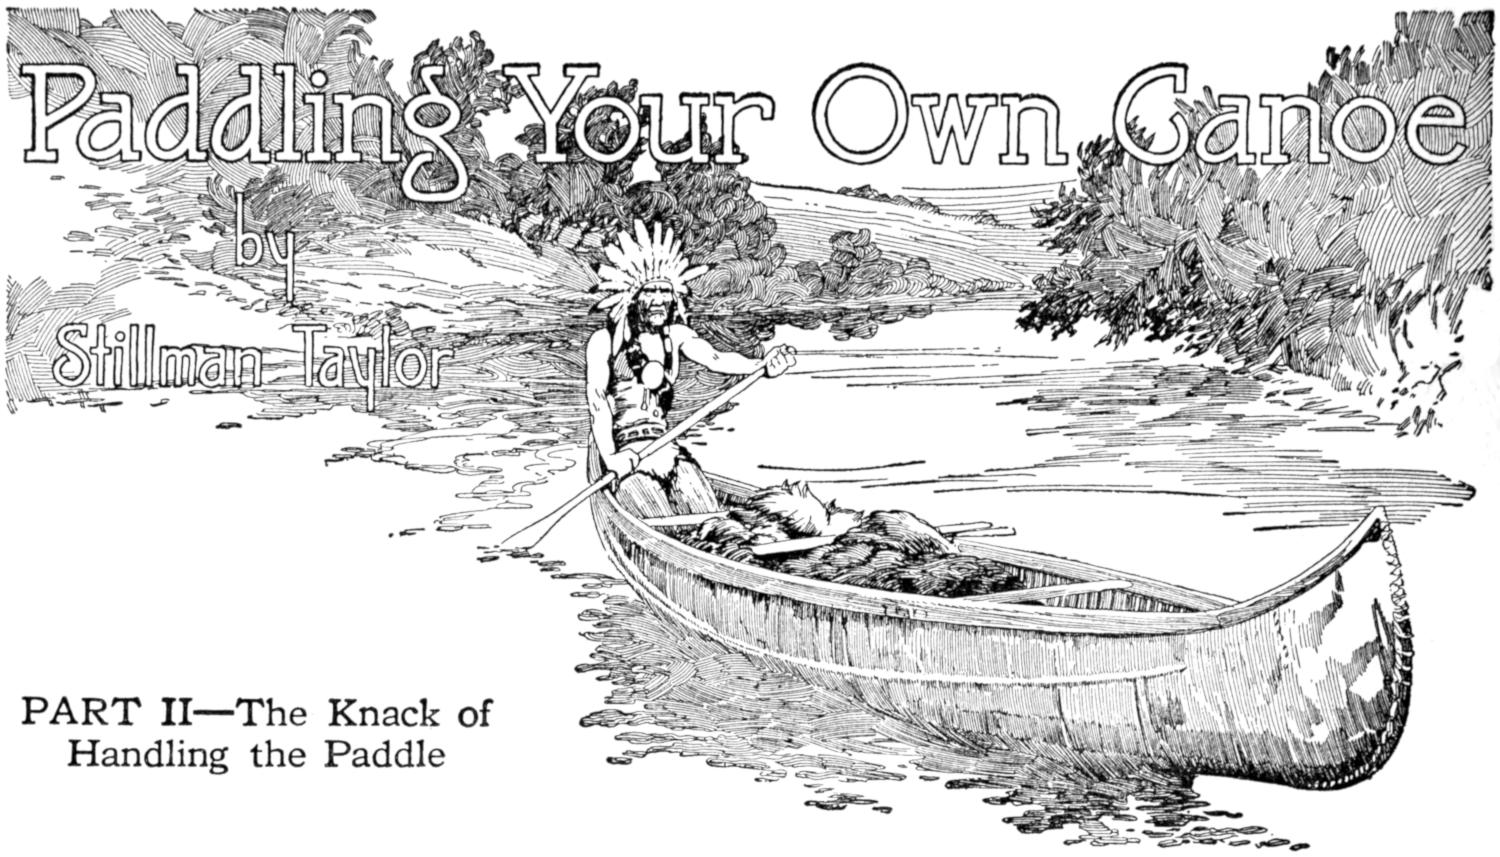 Chapter heading: paddling a canoe